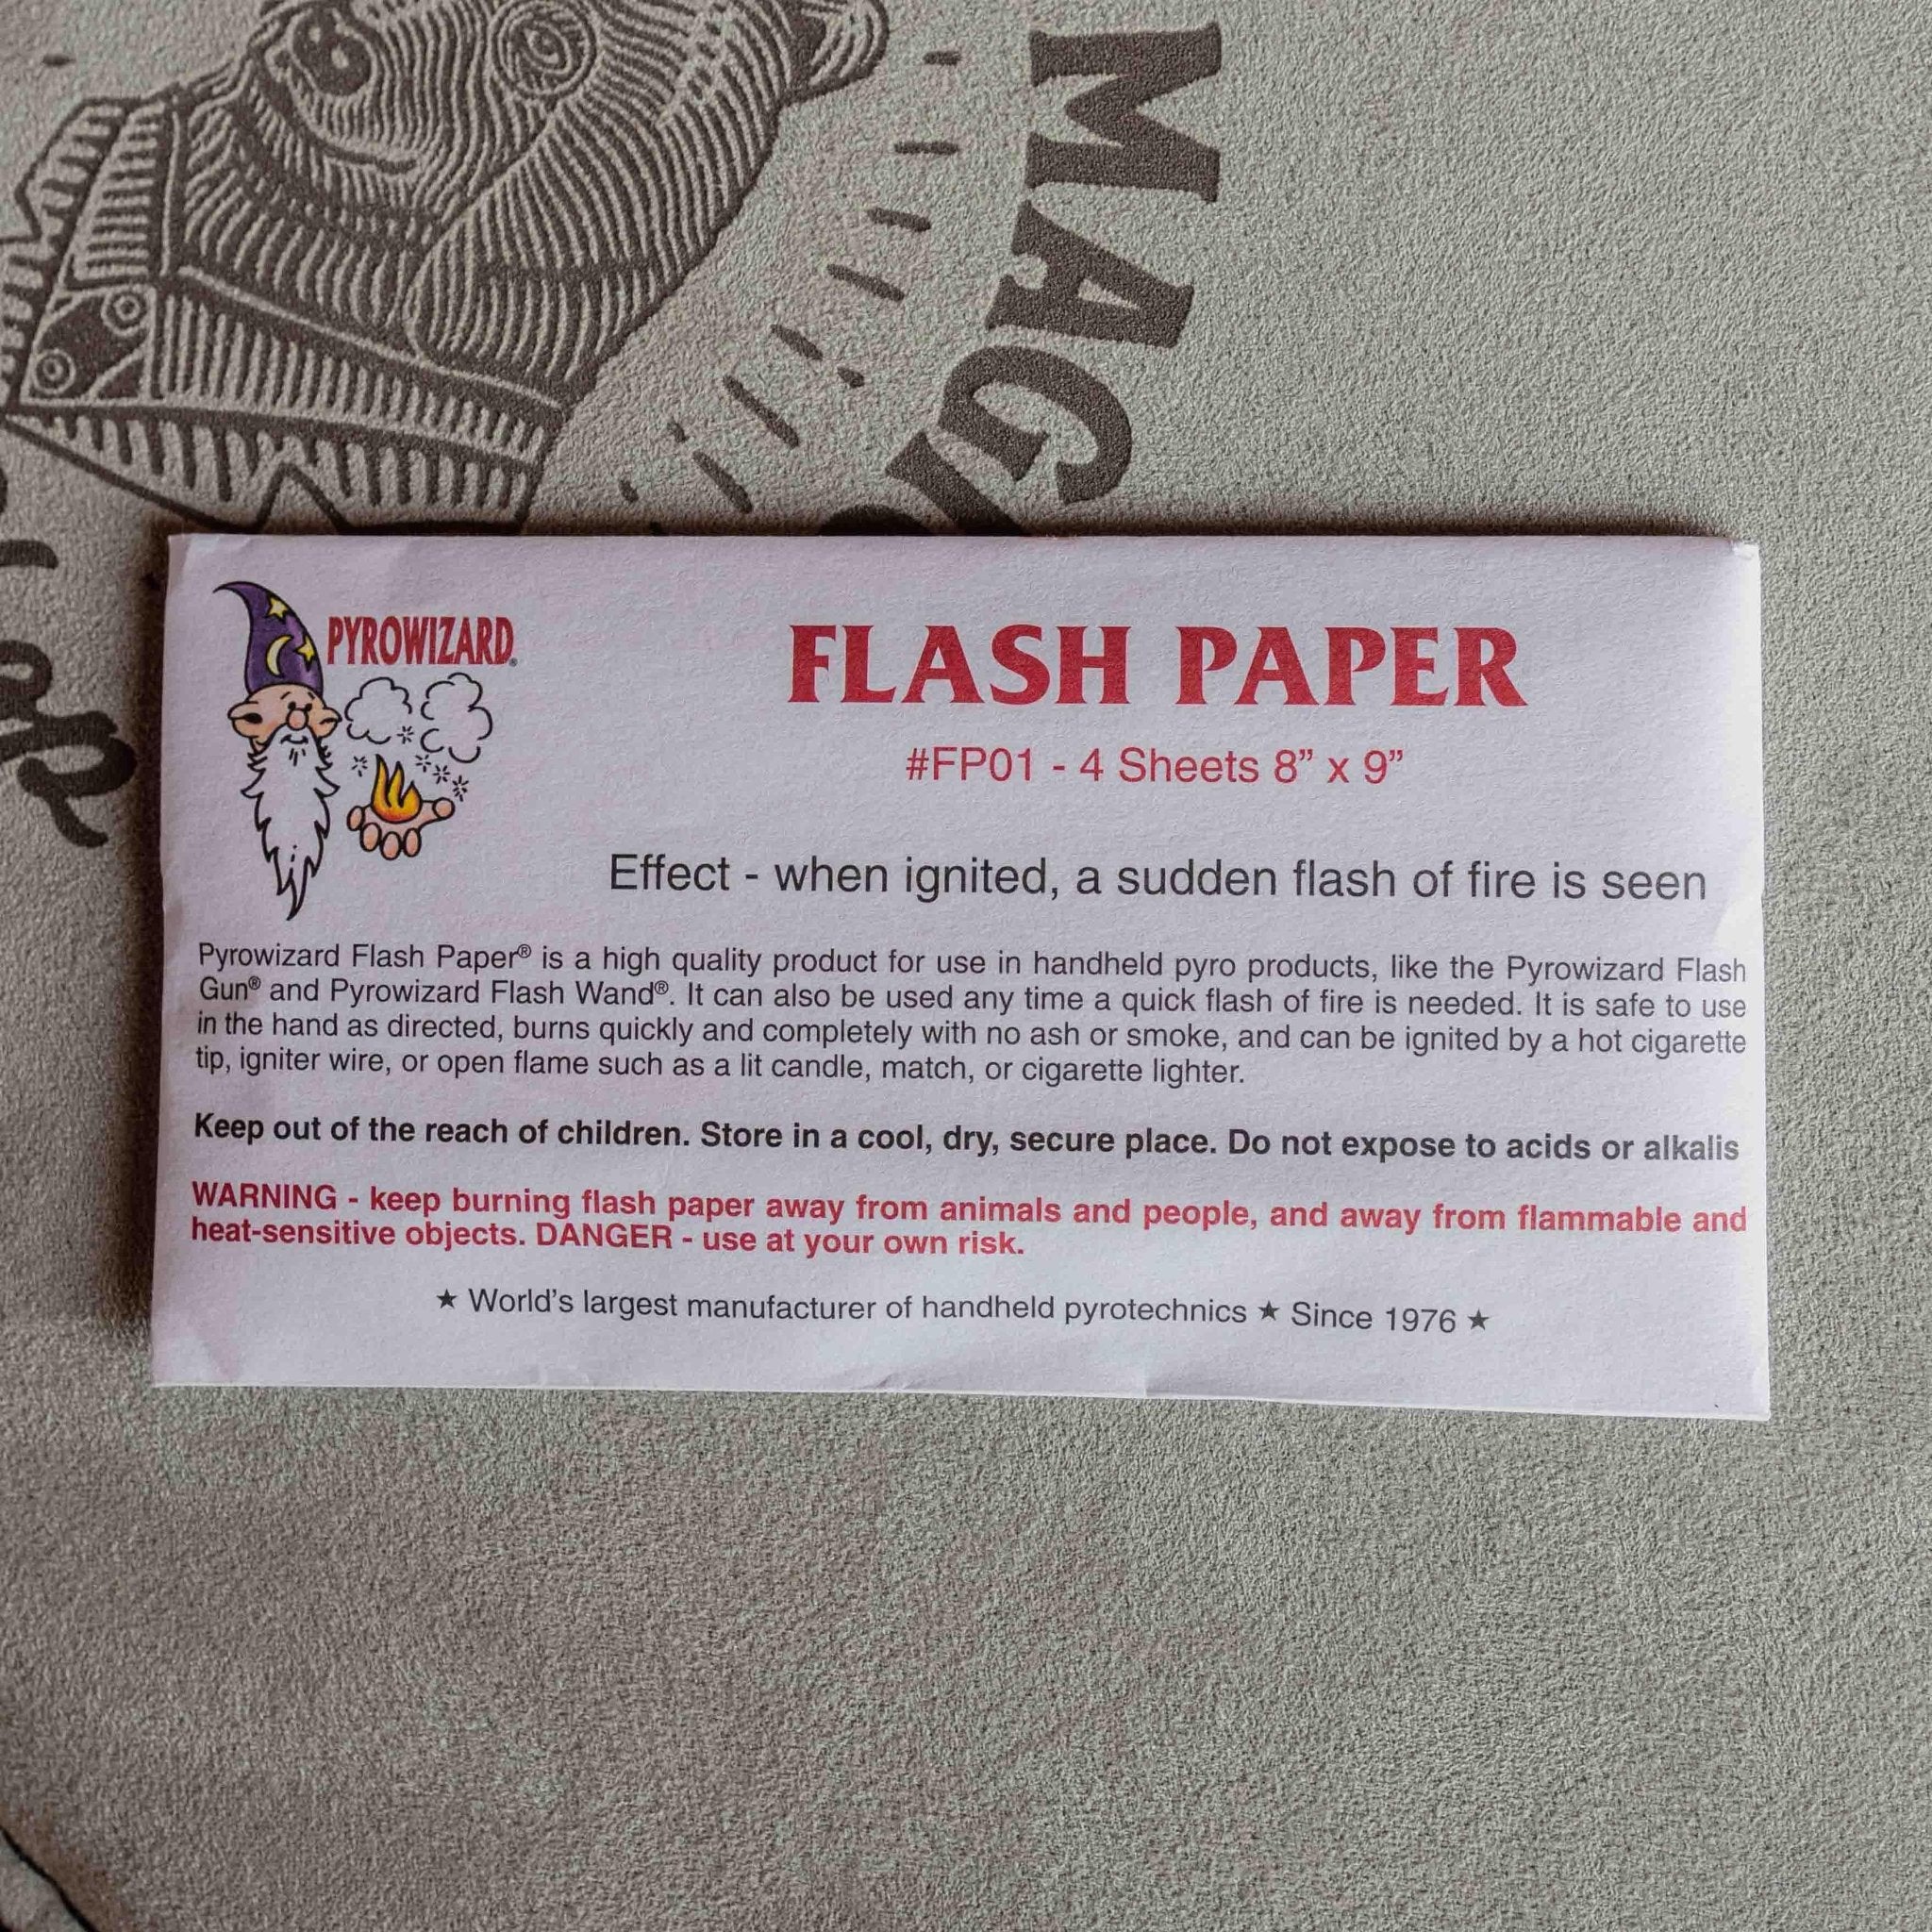 Flash Paper sheets